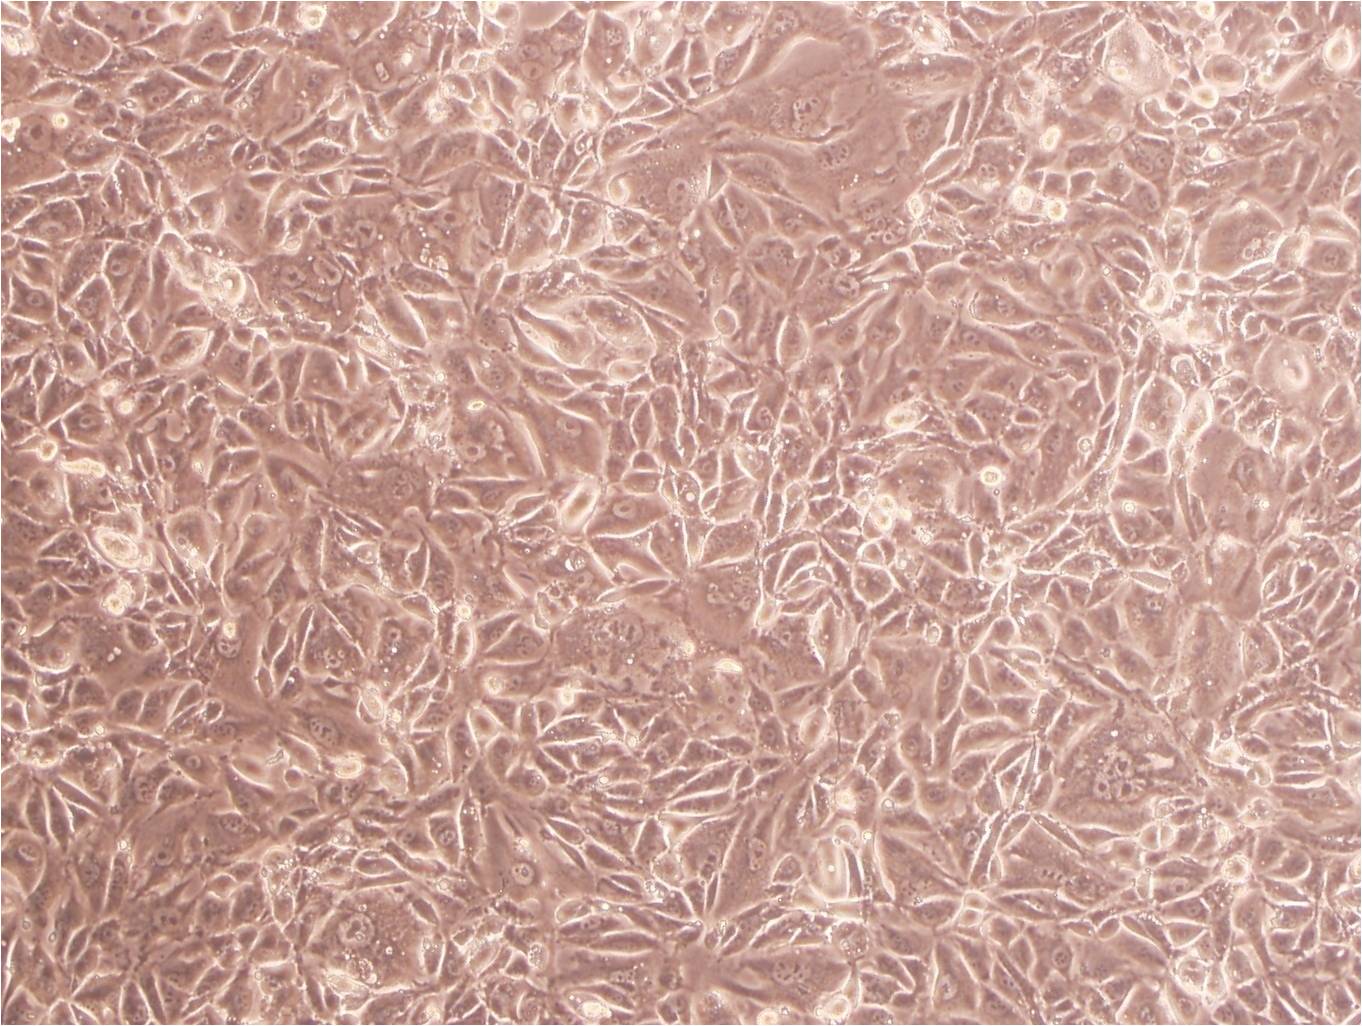 CAL-85-1 Cell|人乳腺癌细胞,CAL-85-1 Cell